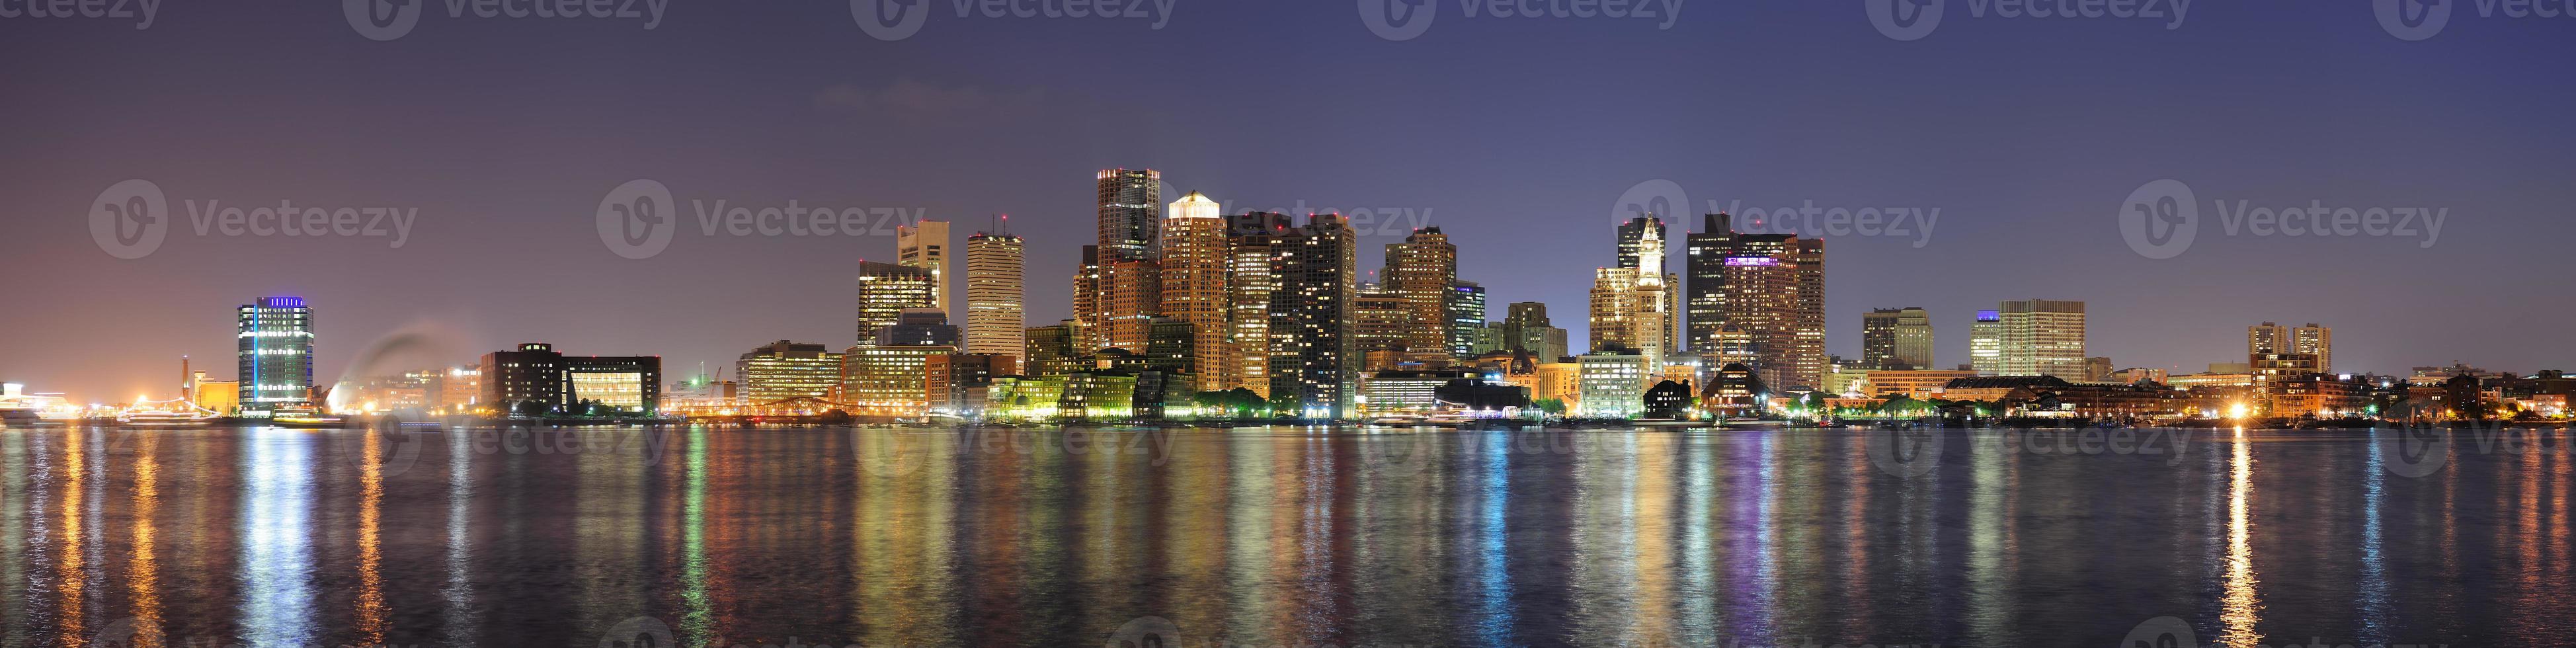 Panorama du centre-ville de Boston photo